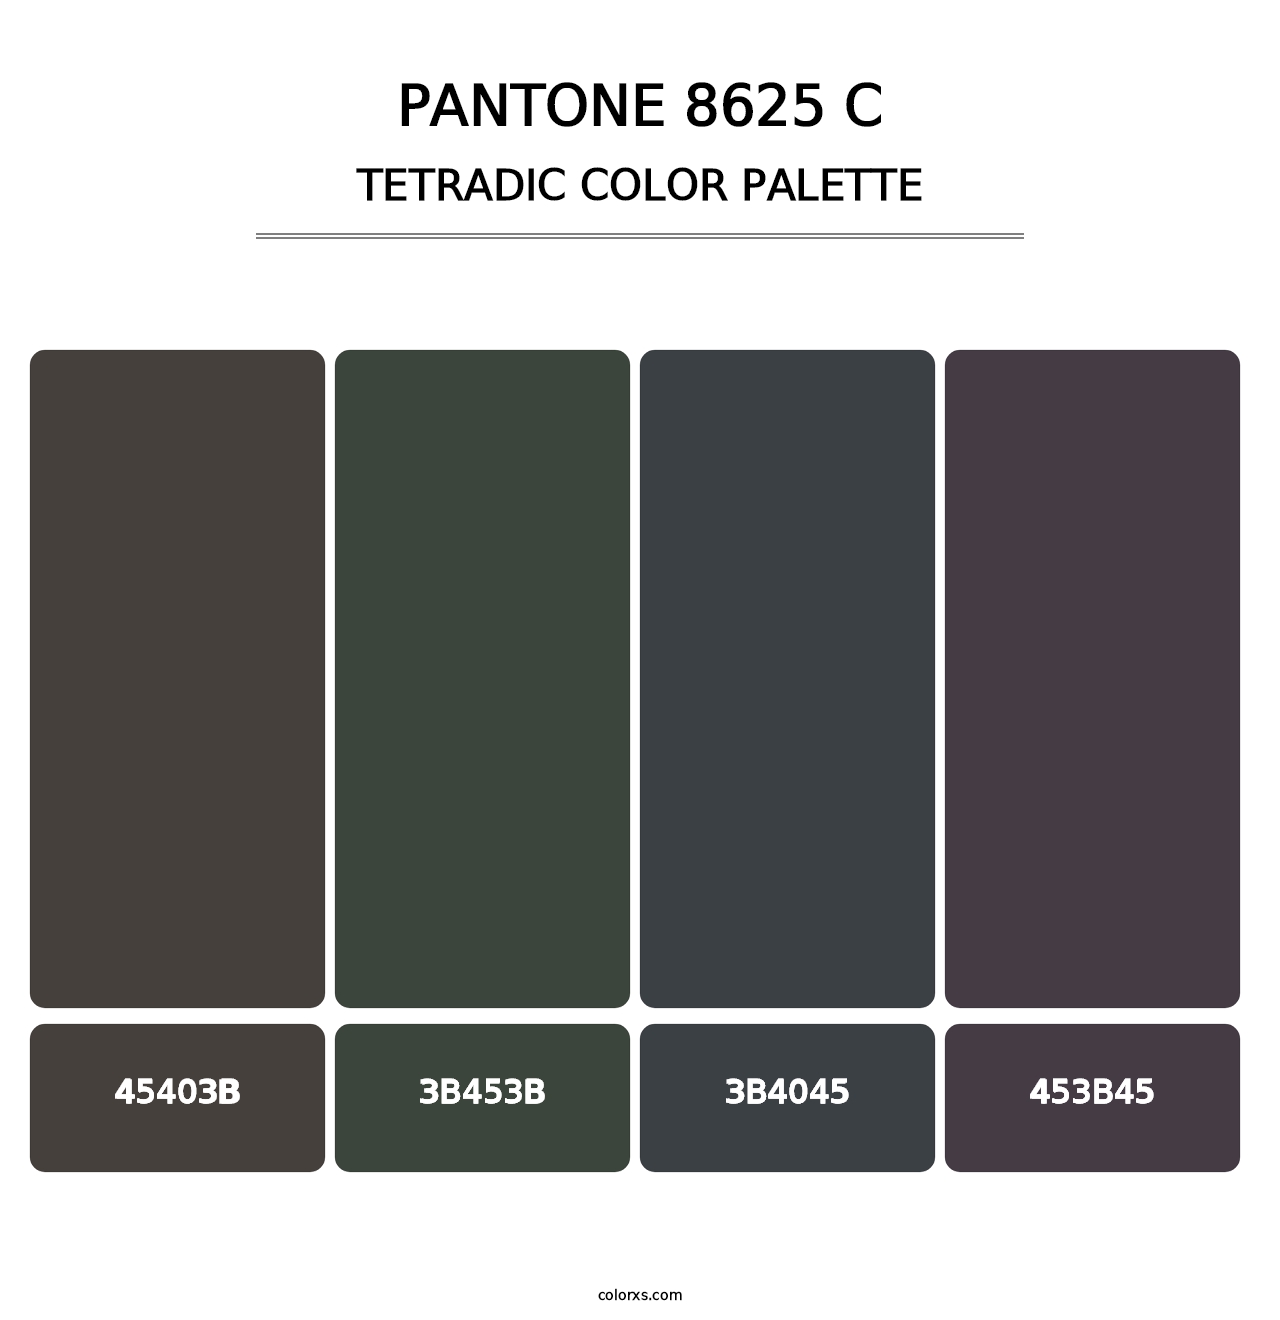 PANTONE 8625 C - Tetradic Color Palette